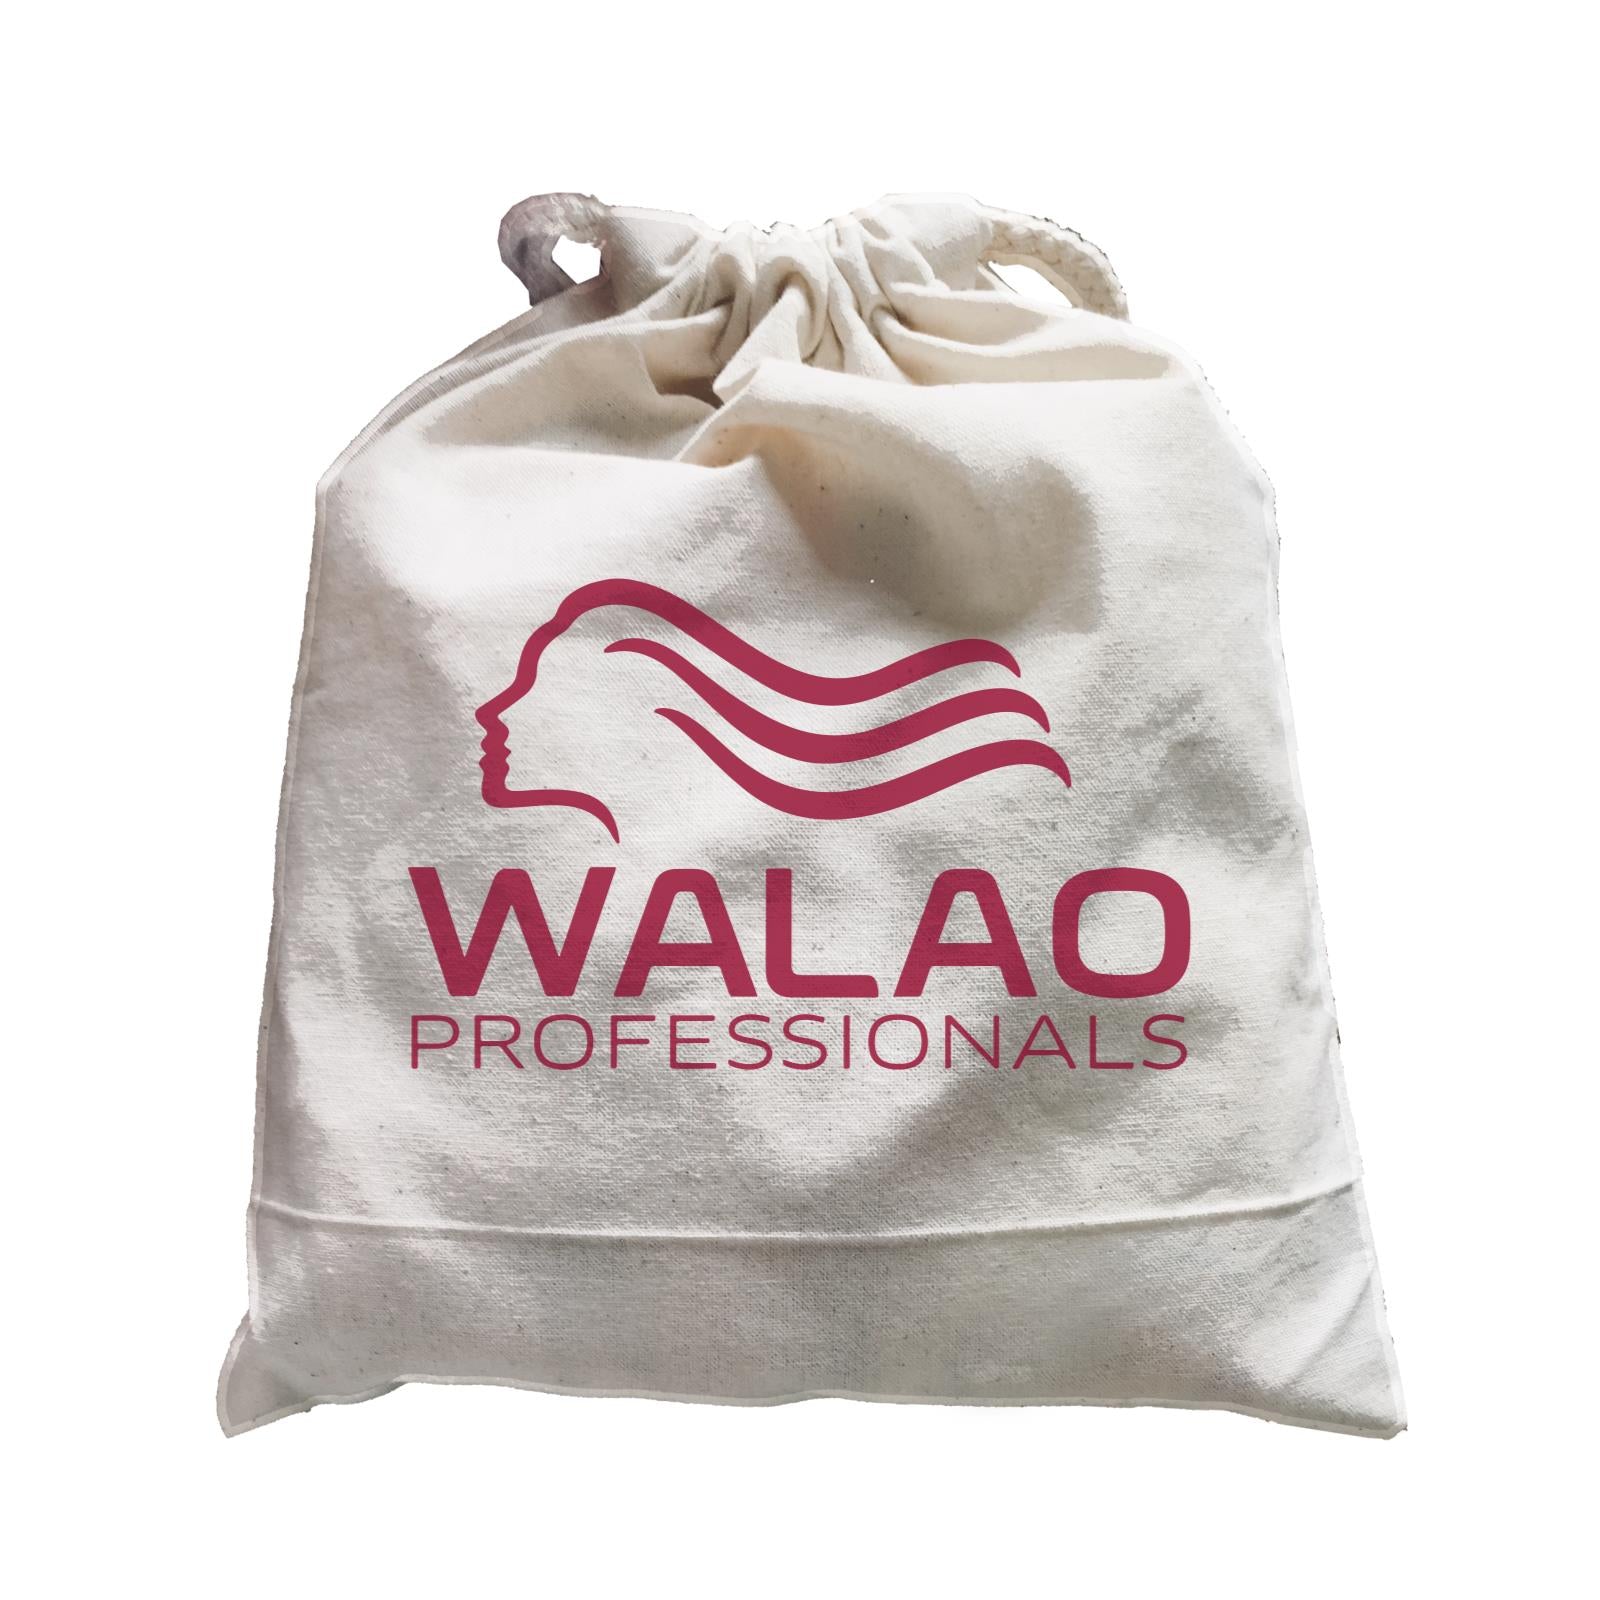 Slang Statement Walao Professional Accessories Satchel